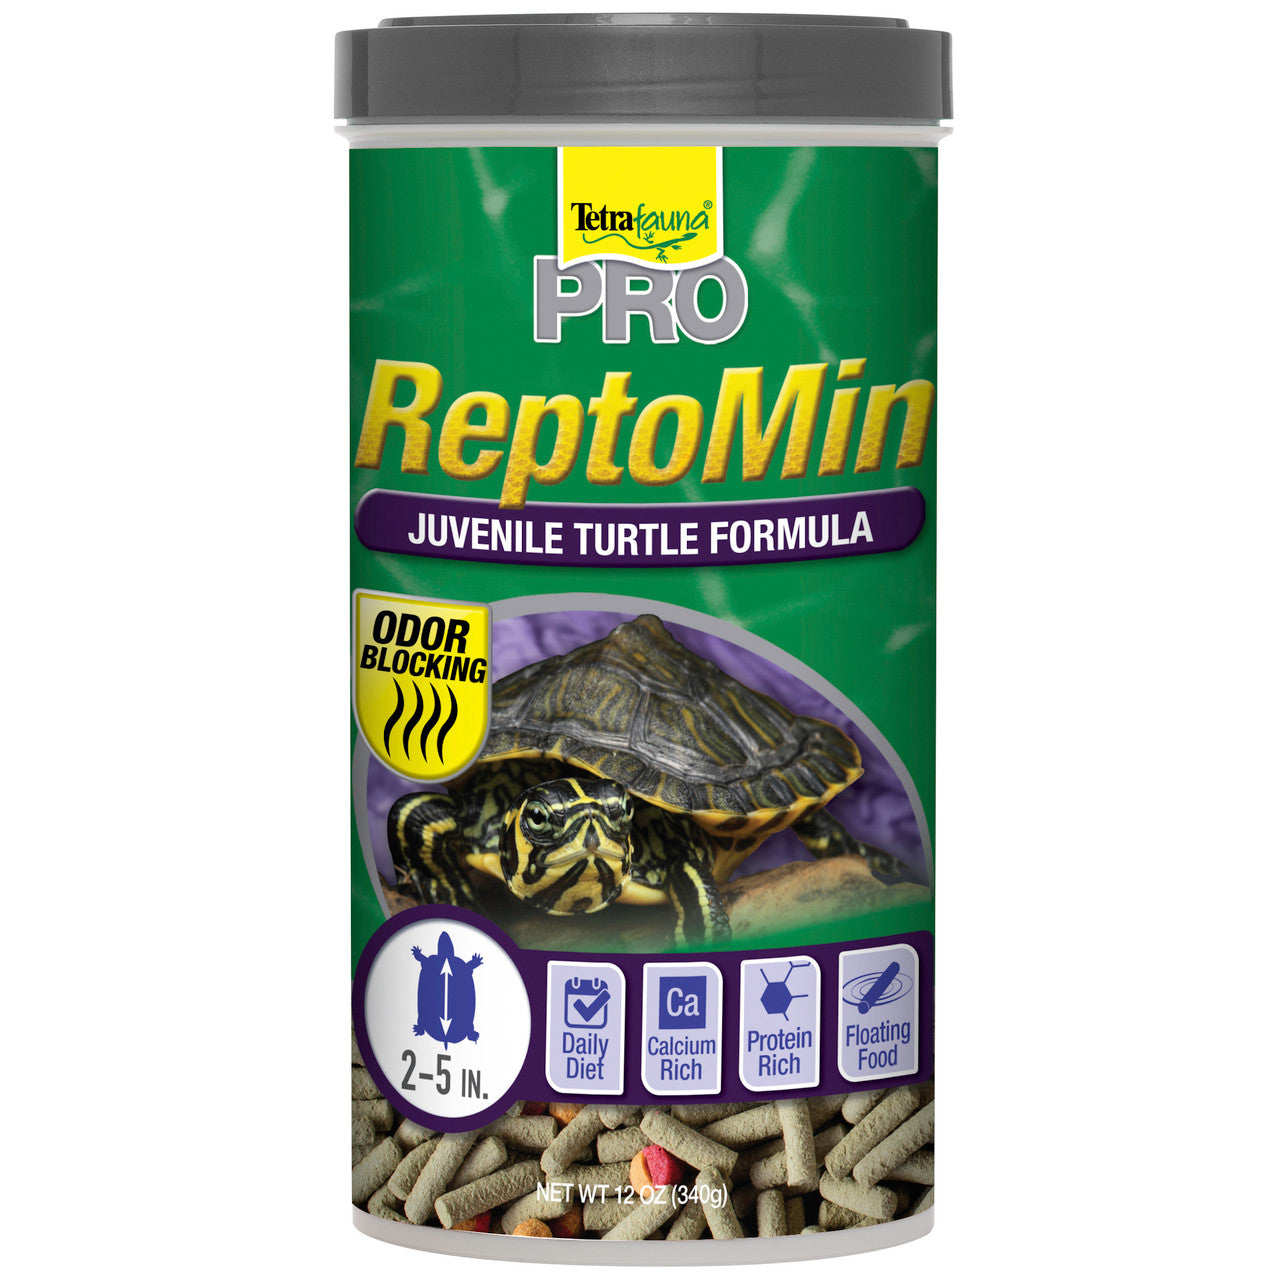 TetraFauna PRO PRO ReptoMin Juvenile Turtle Formula Sticks Dry Food 12 oz